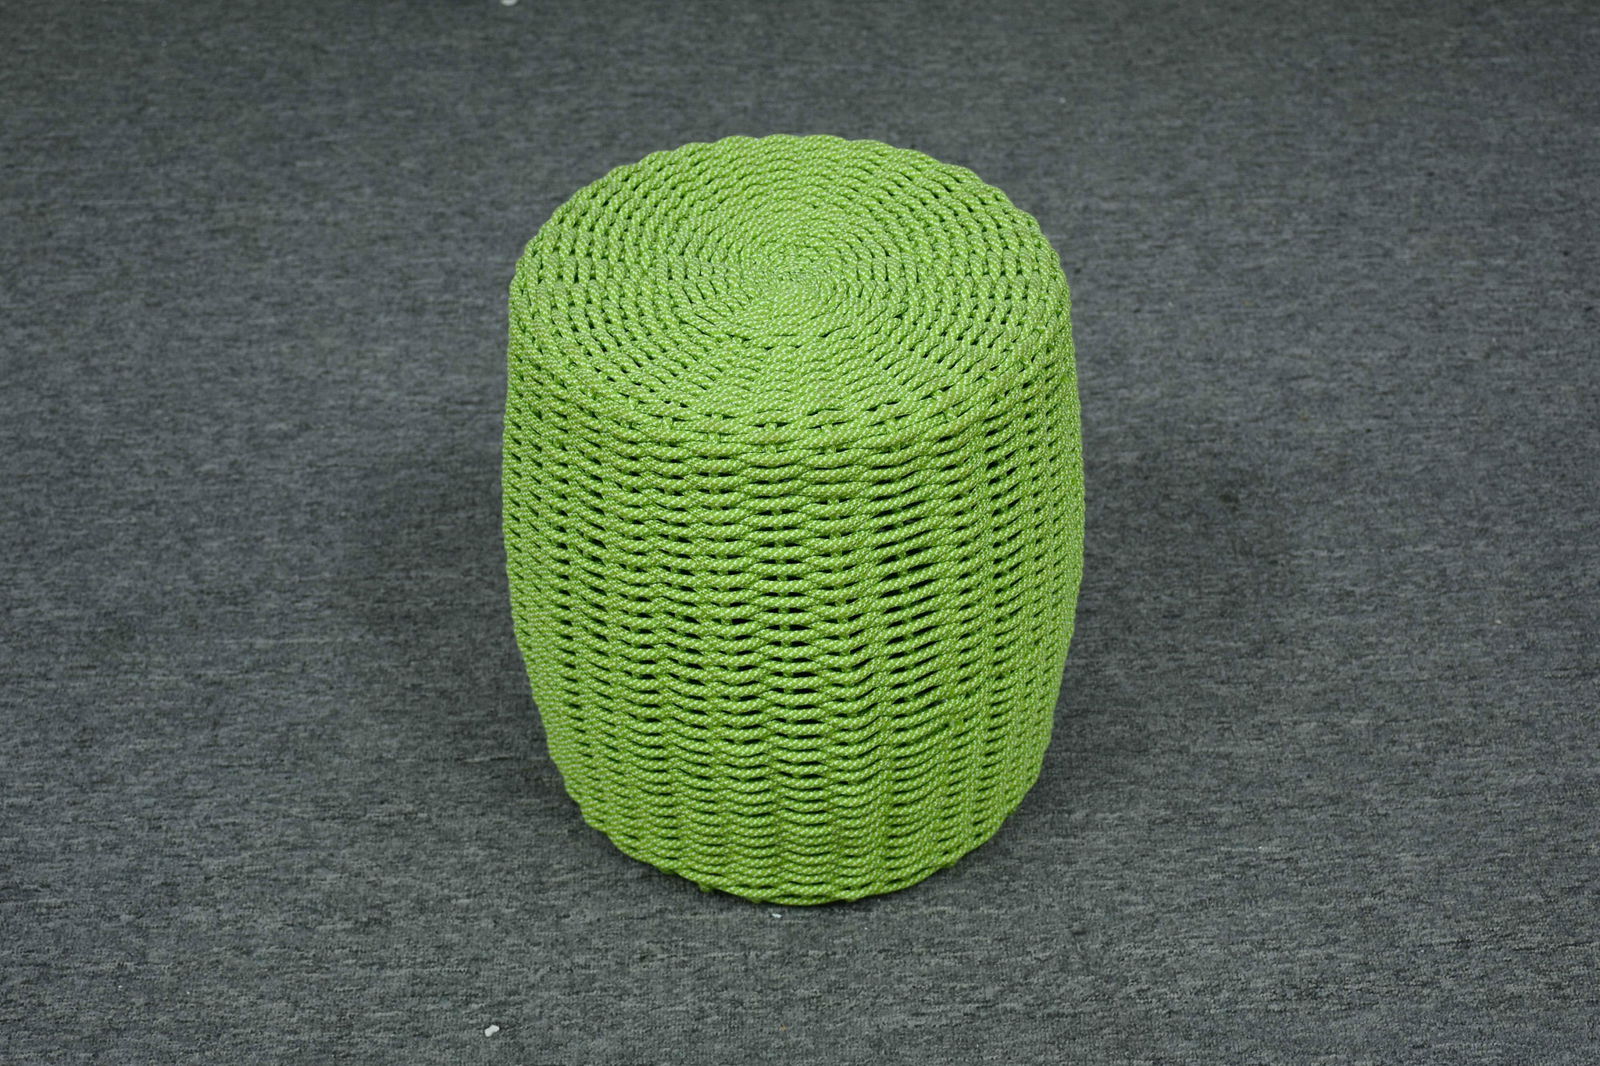 Hormel little furniture fiber rope weaving round shaped foot stool ottoman 4